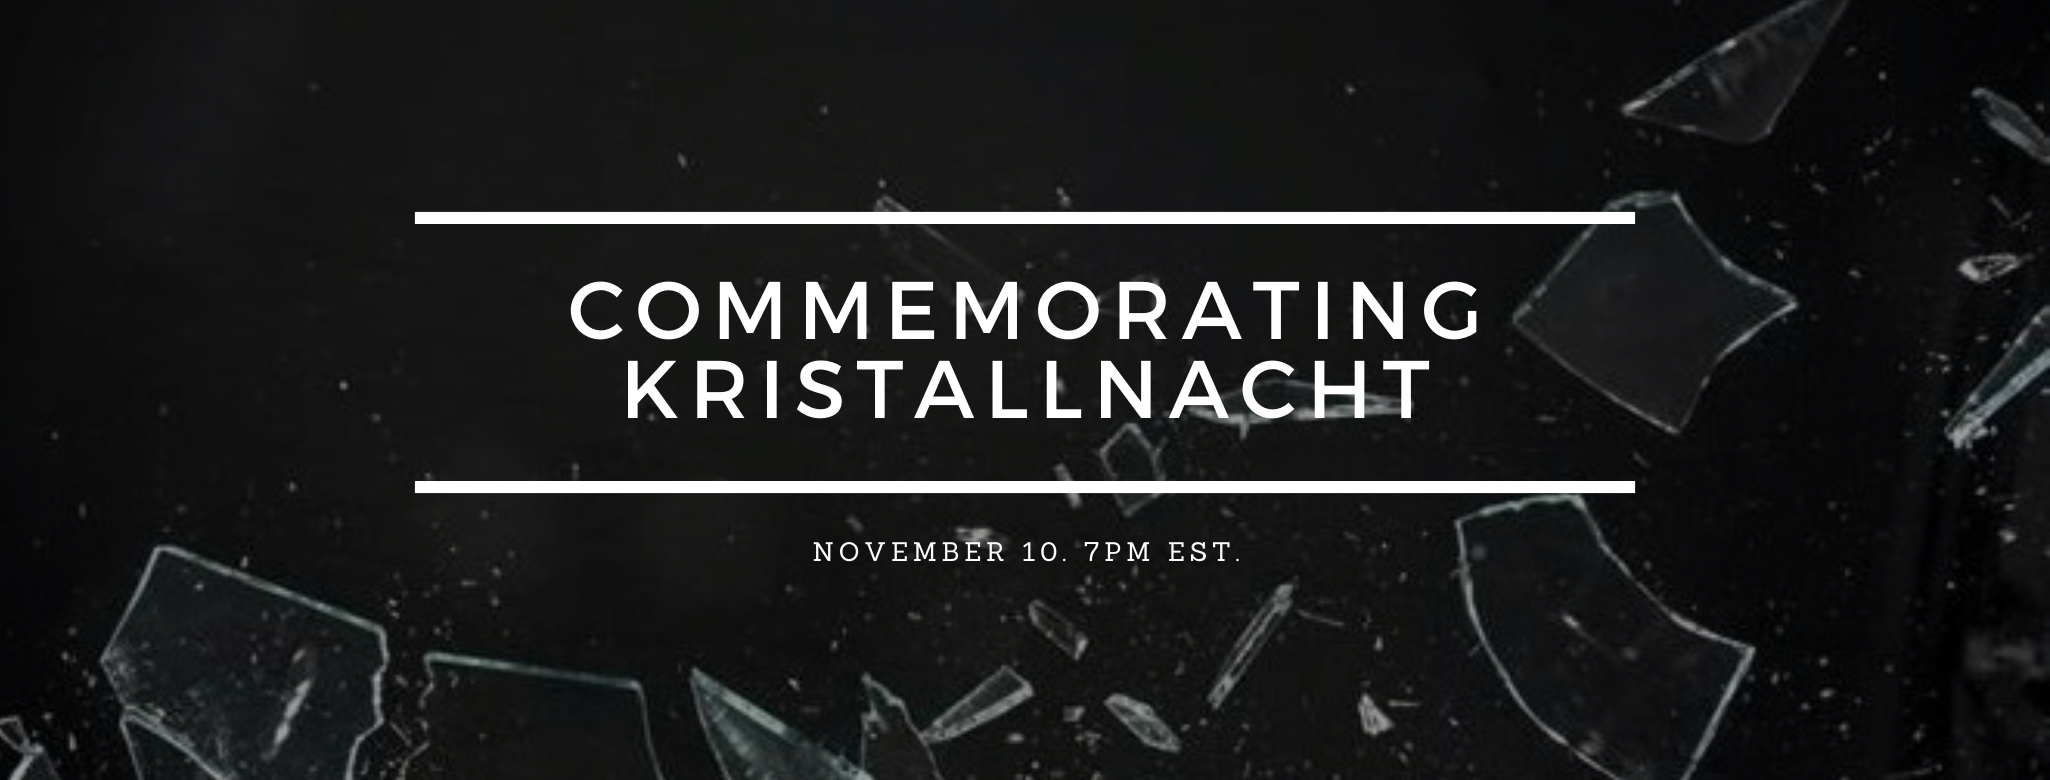 Commemorating Kristallnacht November 10, 2020 7pm eastern